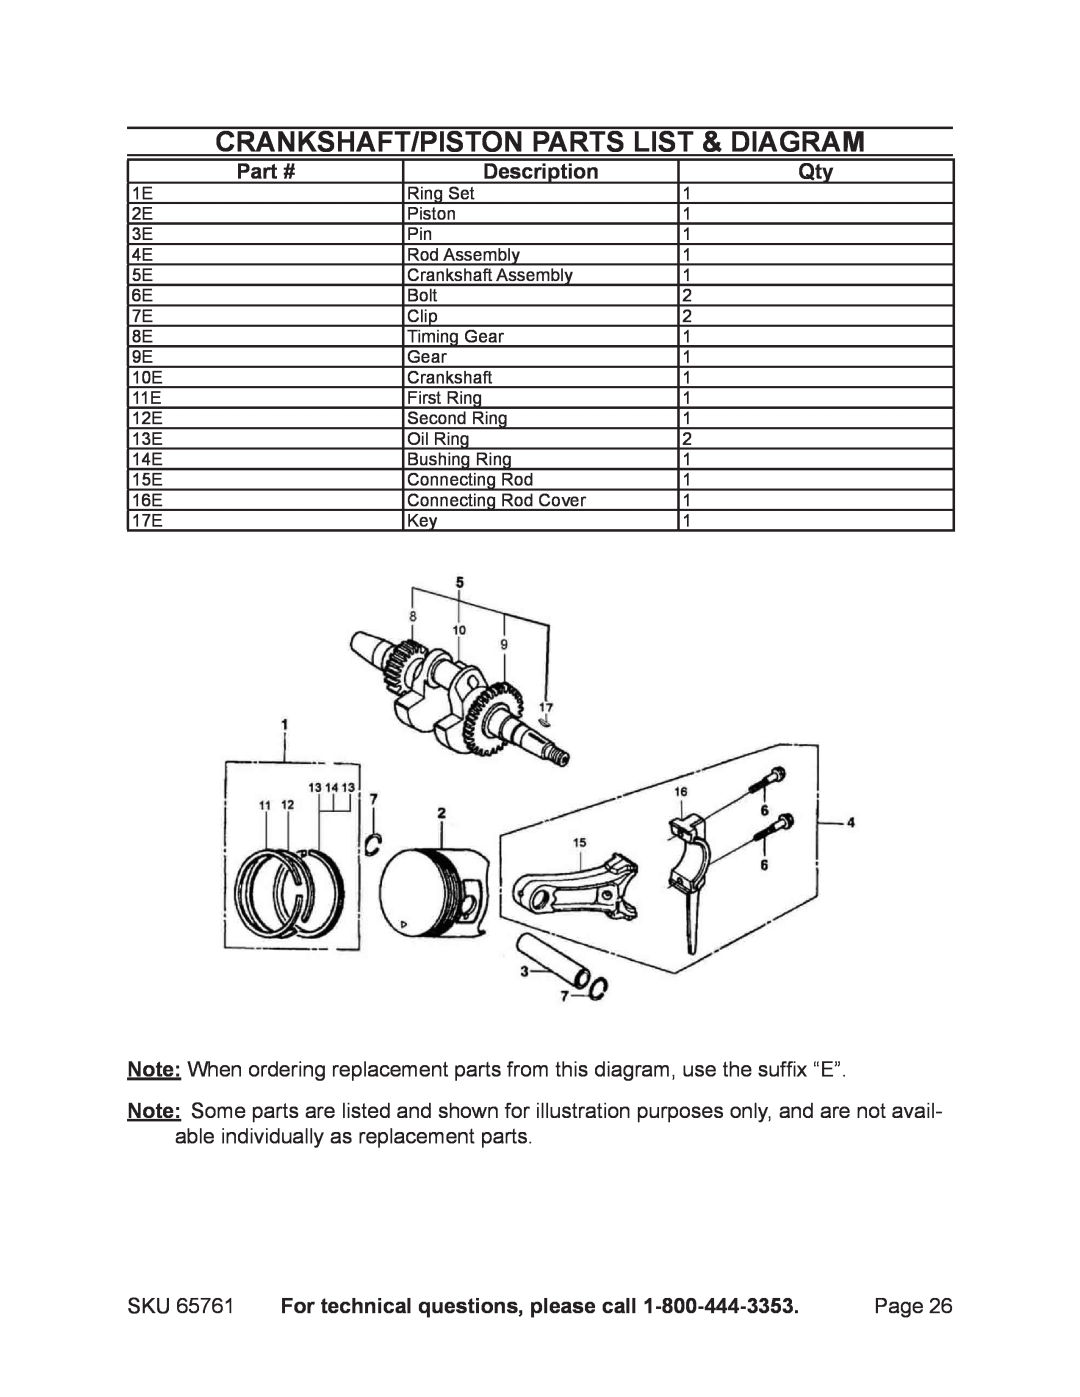 Harbor Freight Tools 65761 manual Crankshaft/Piston Parts List & Diagram, Description, For technical questions, please call 